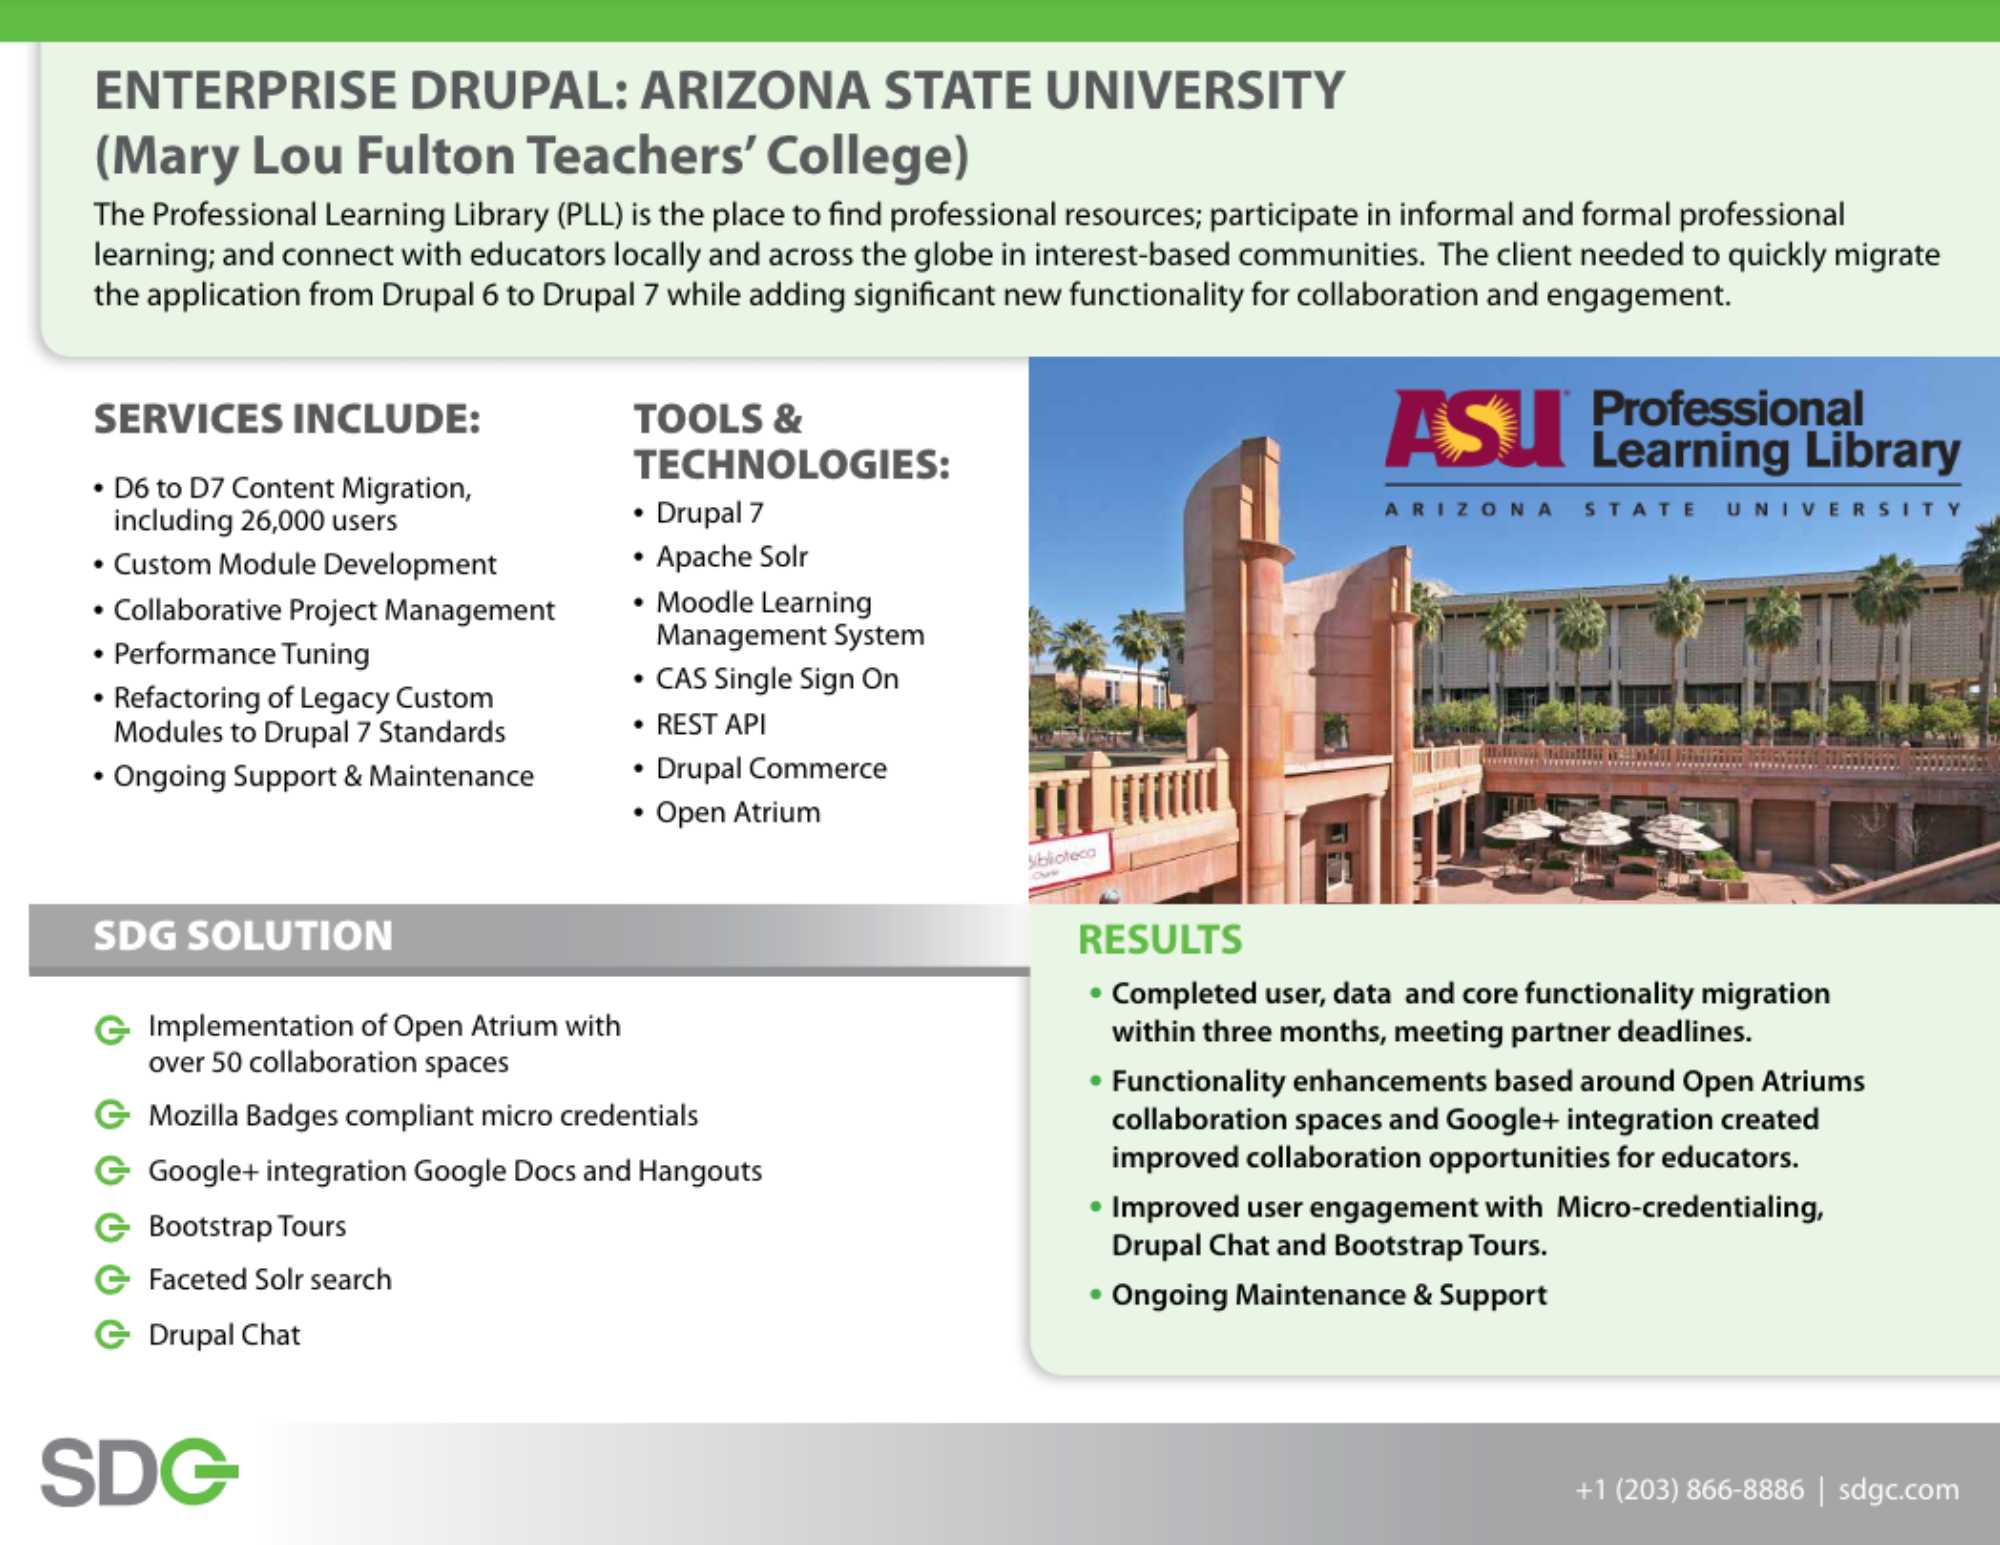 Enterprise Drupal Arizona State University Migration Case Study Image